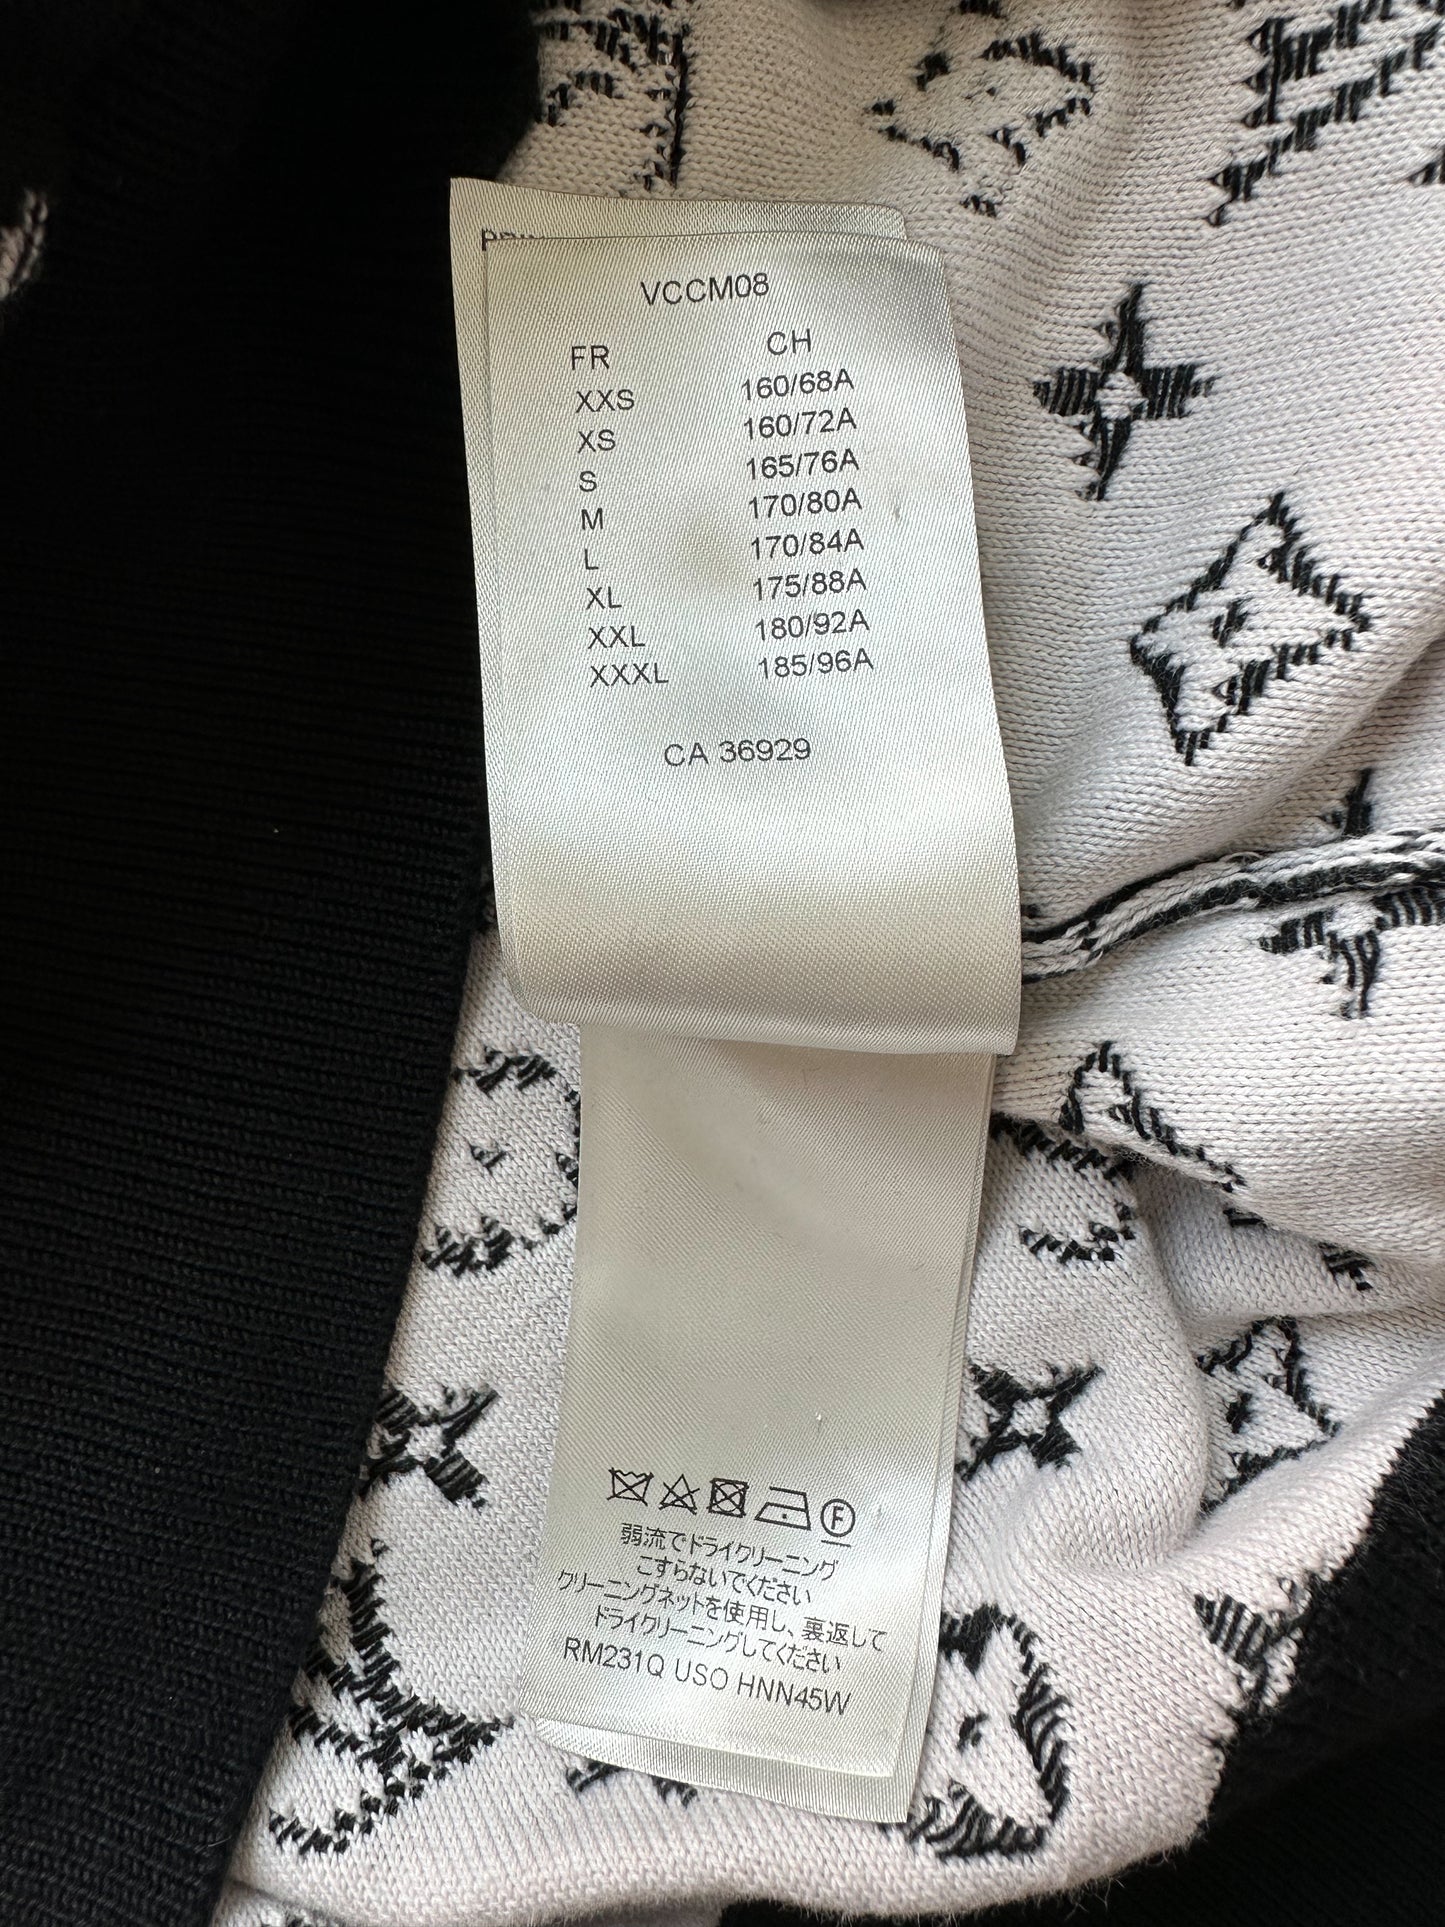 Louis Vuitton monogram hoodie